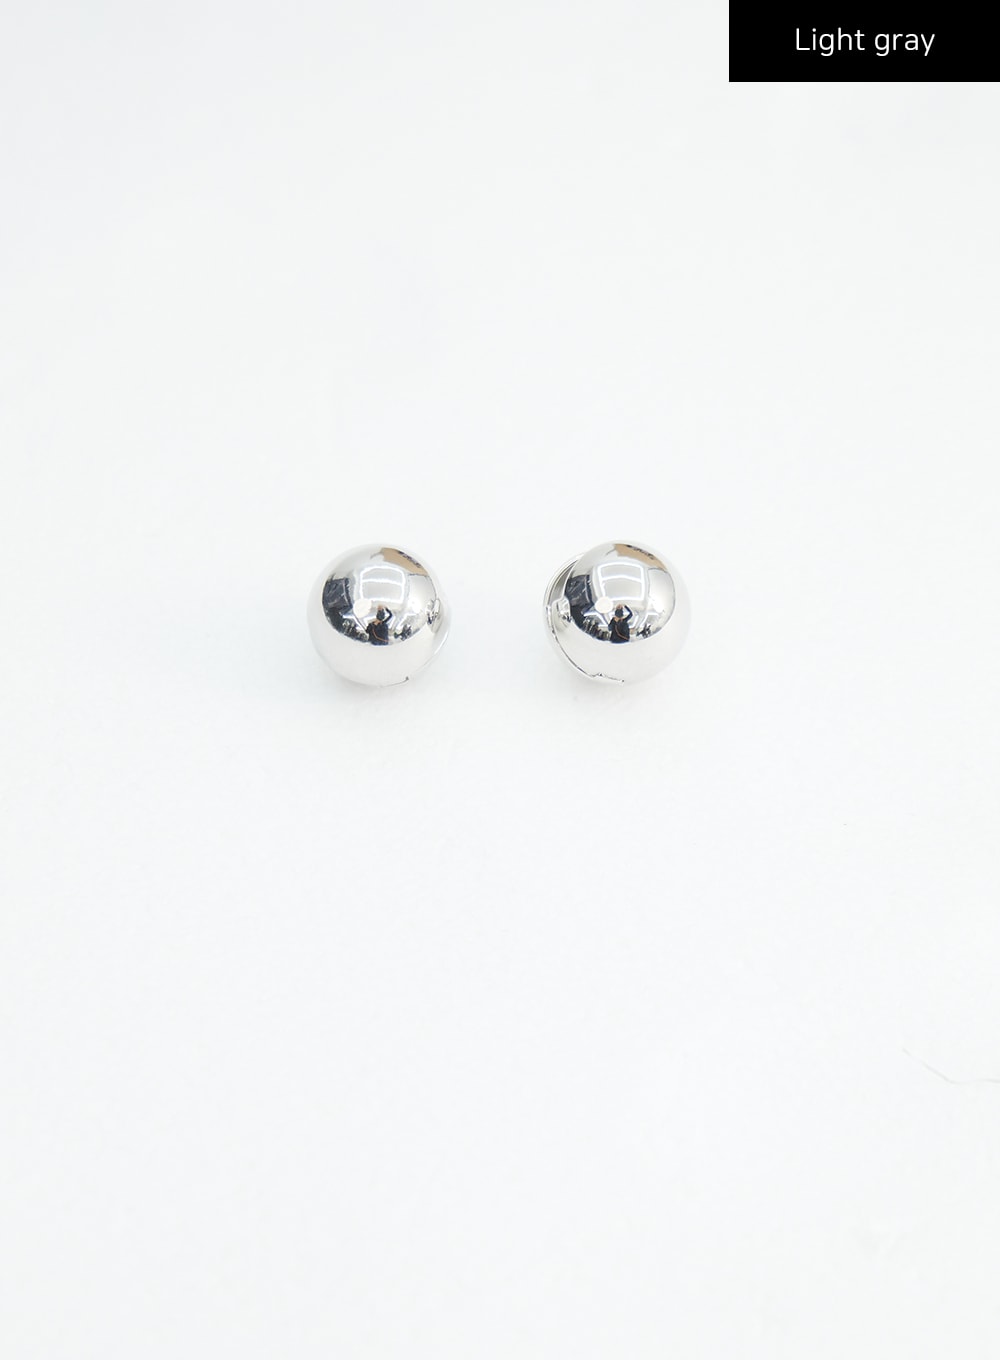 sphere-earrings-in317 / Light gray